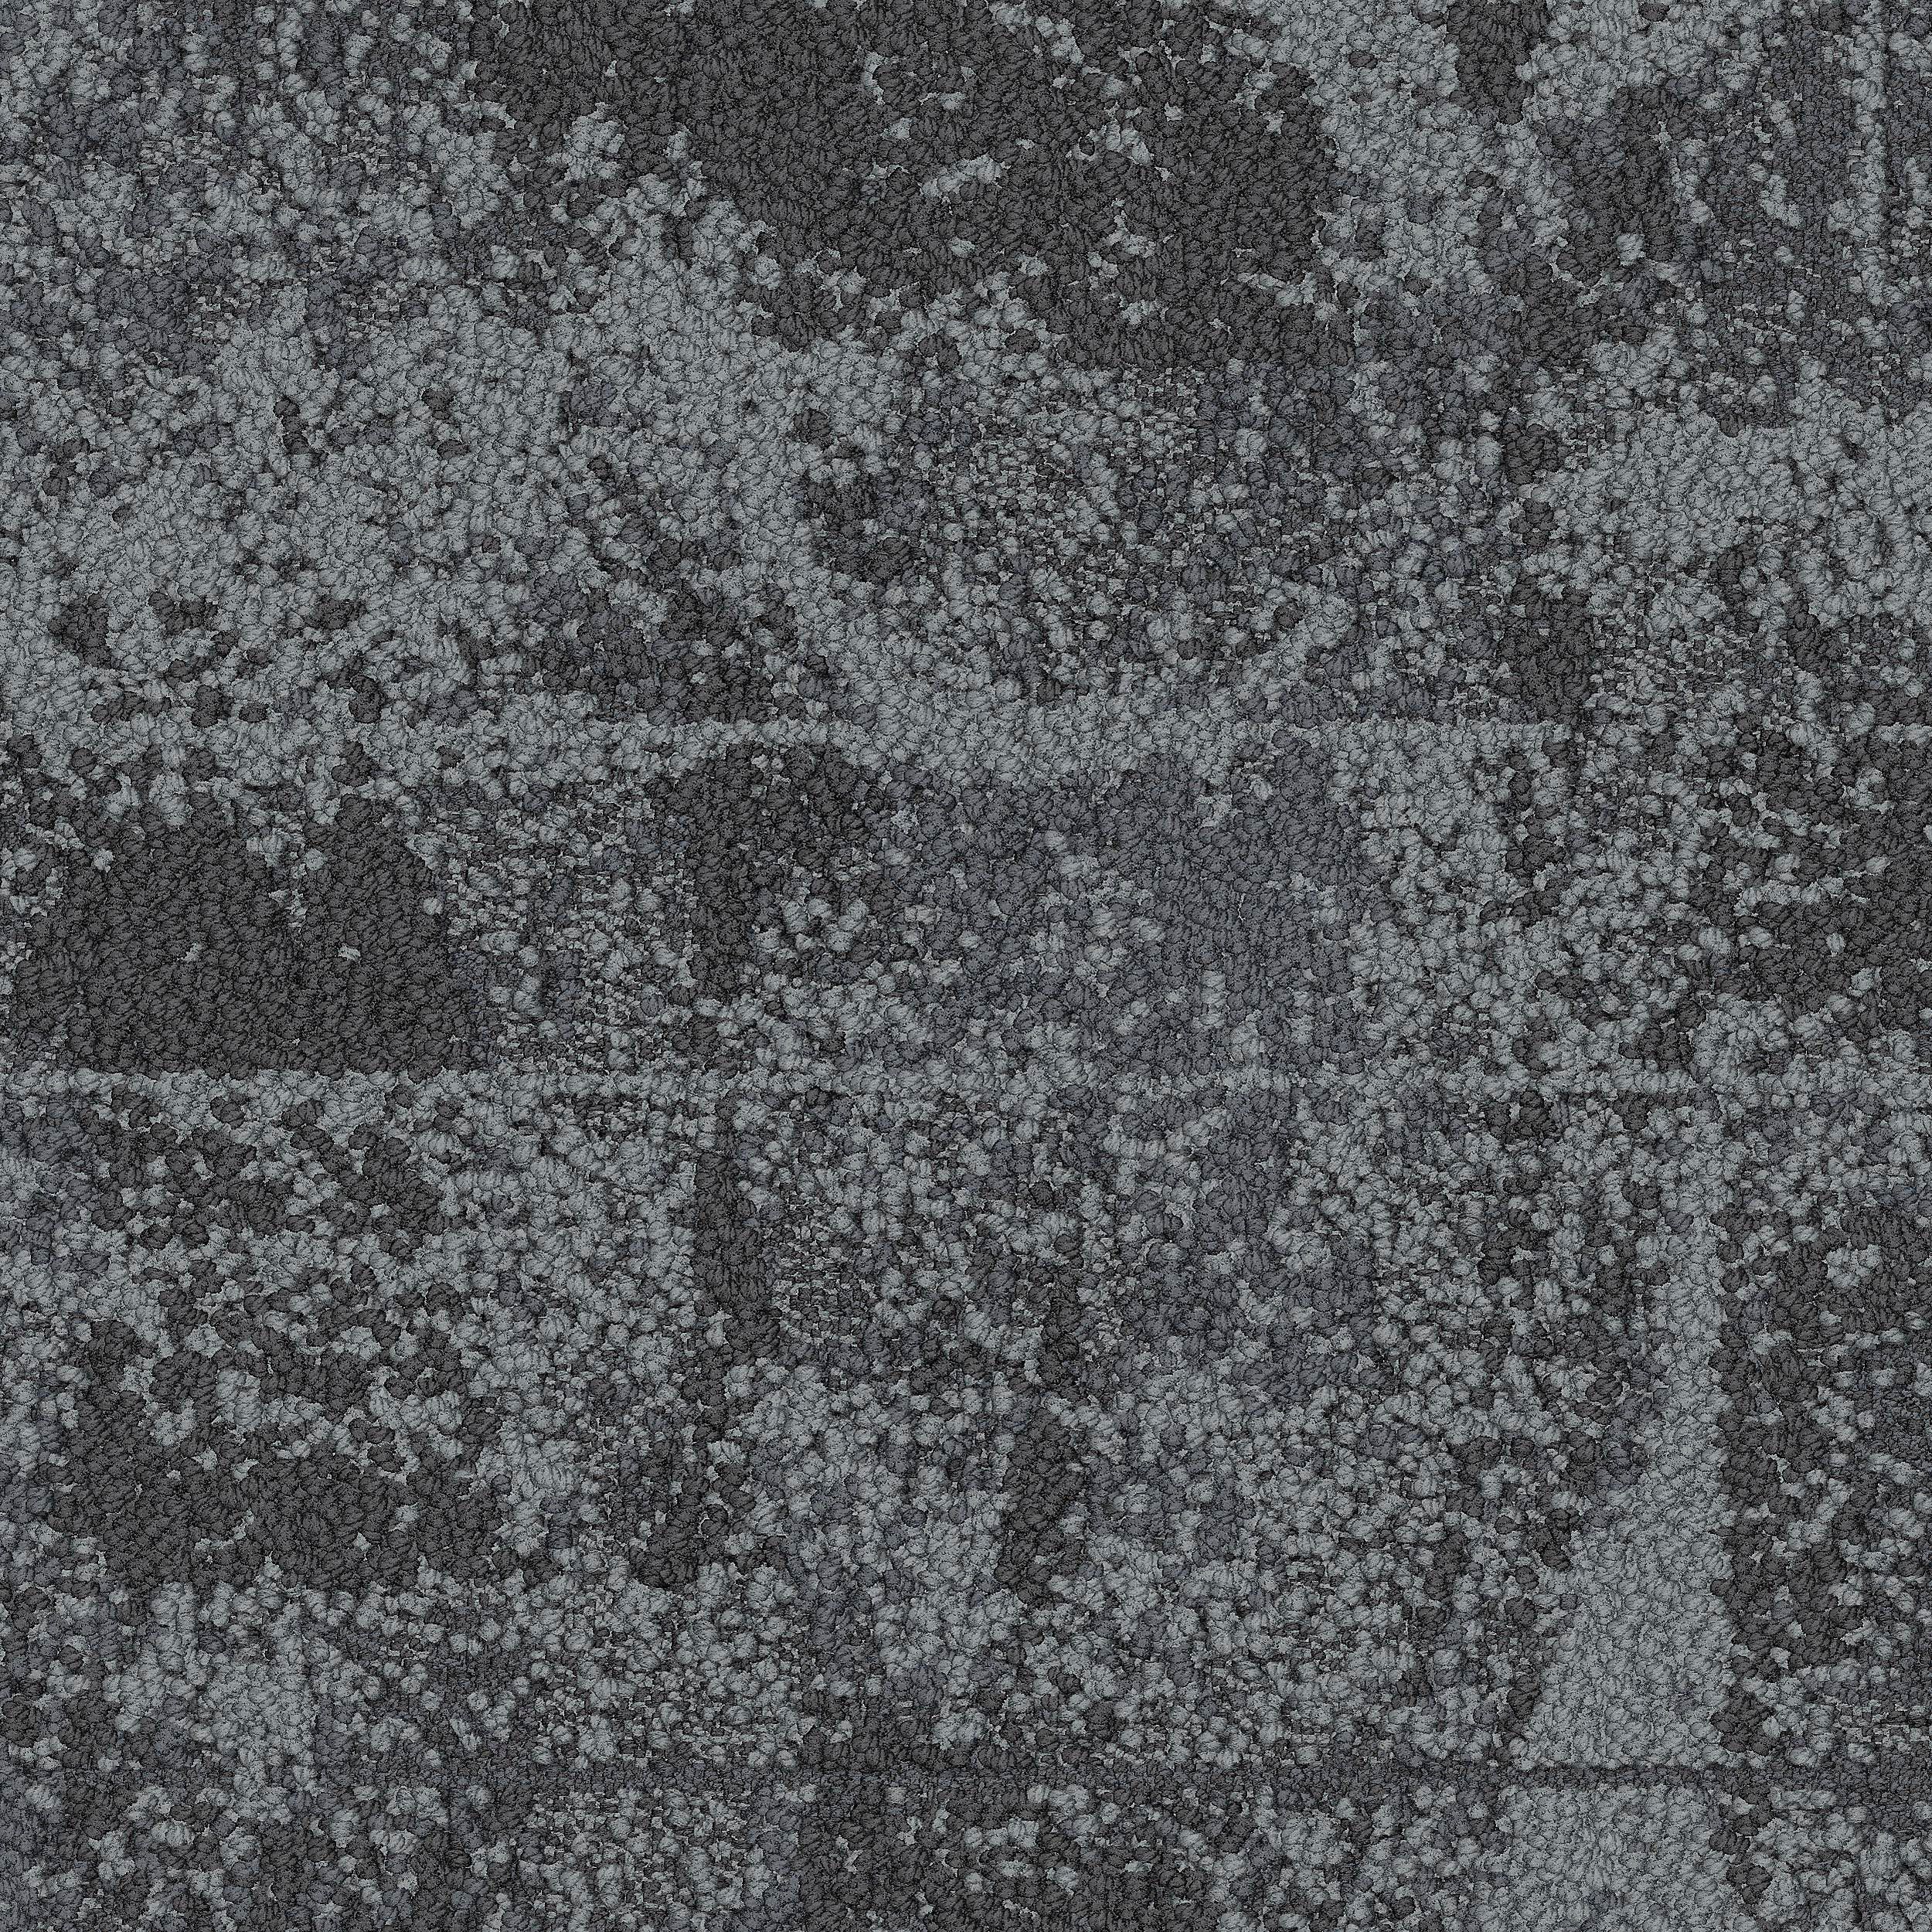 B601 Carpet Tile In Black Sea número de imagen 2